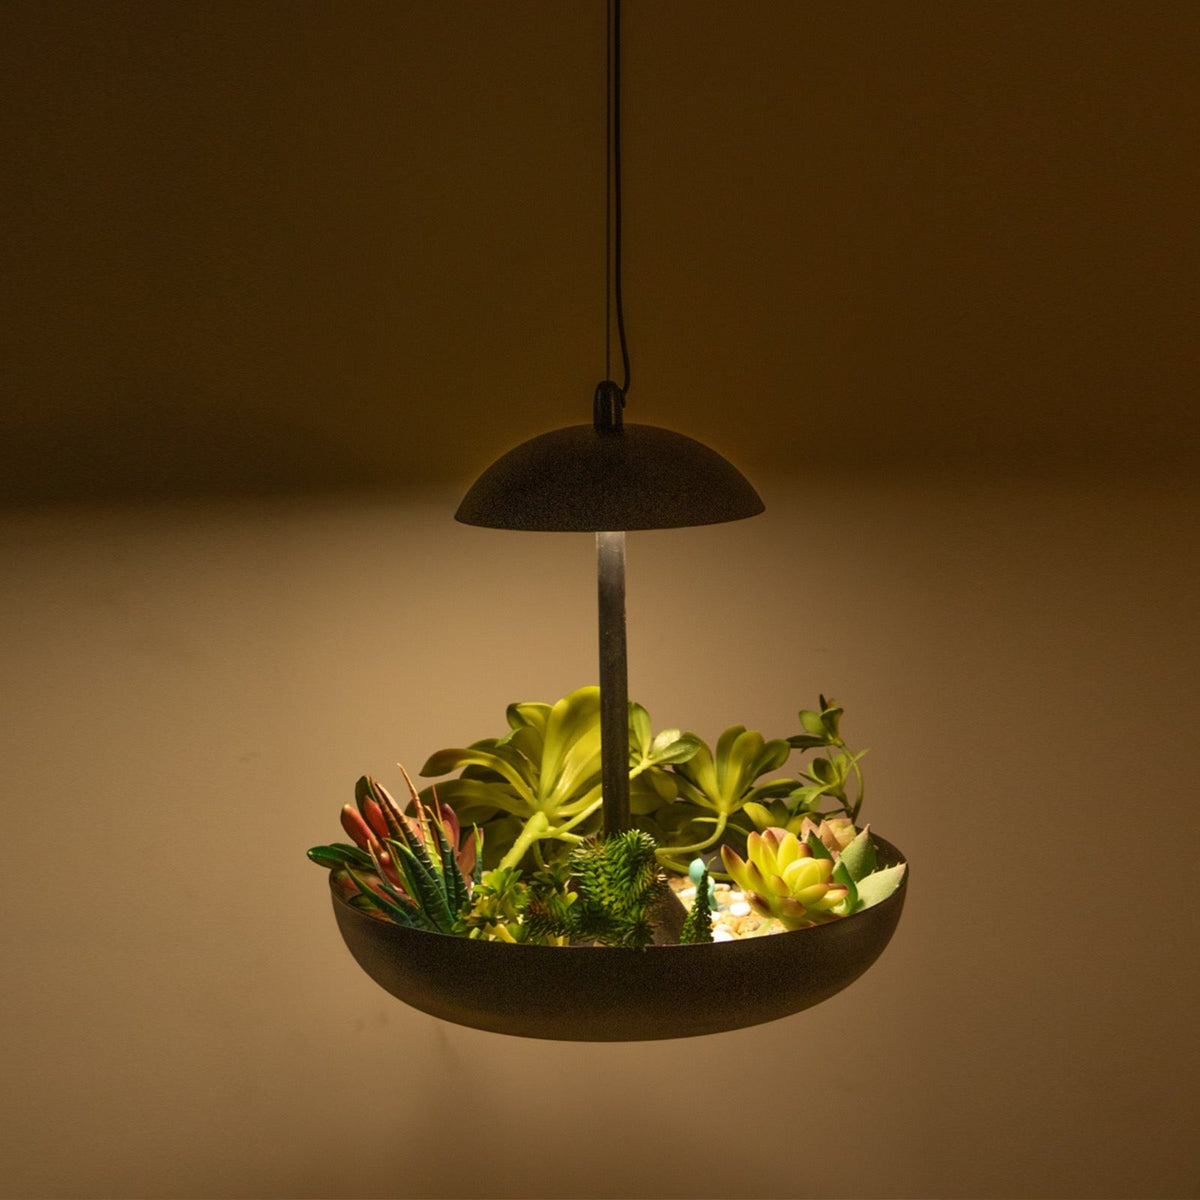 Shop Hanging Garden LED Pendant Light online